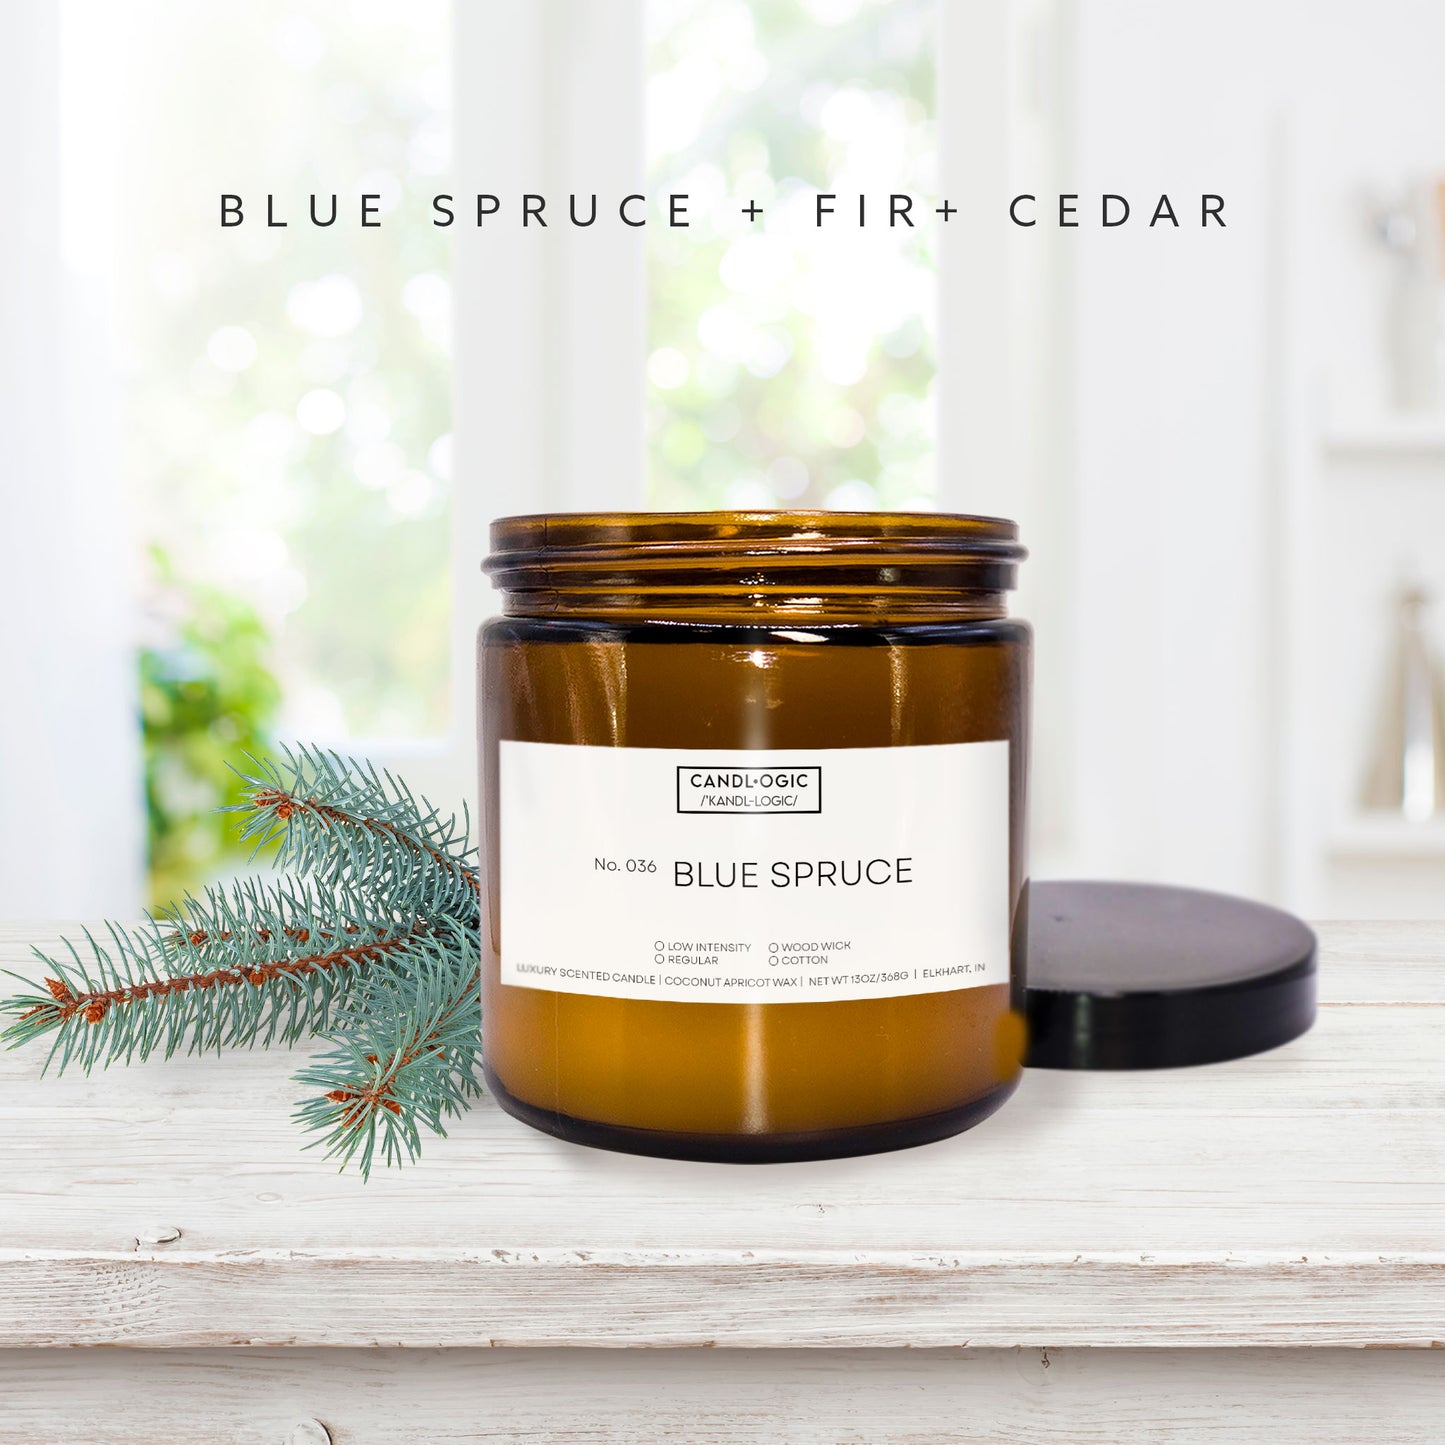 No. 036 Blue Spruce candle - Blue Spruce, Fir & Cedar